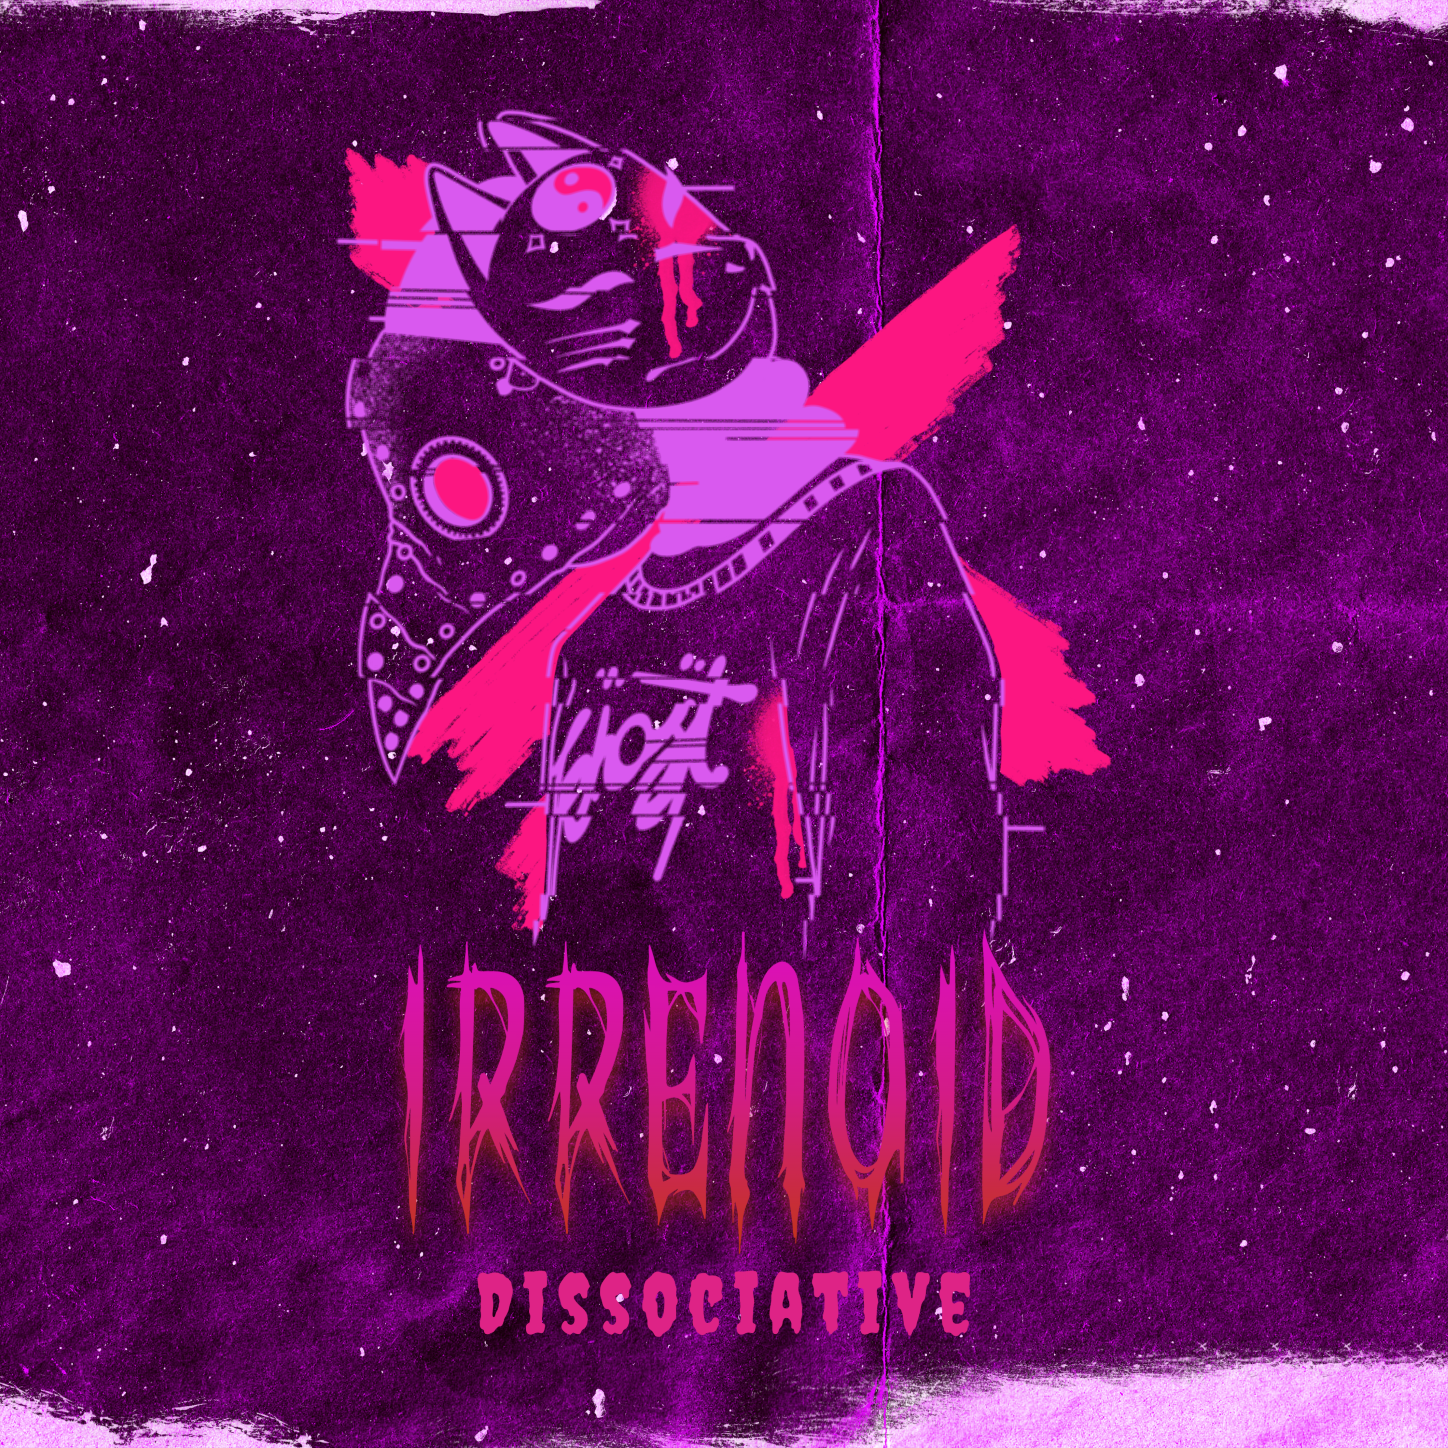 Irrenoid - Dissociative (Much Smaller).png